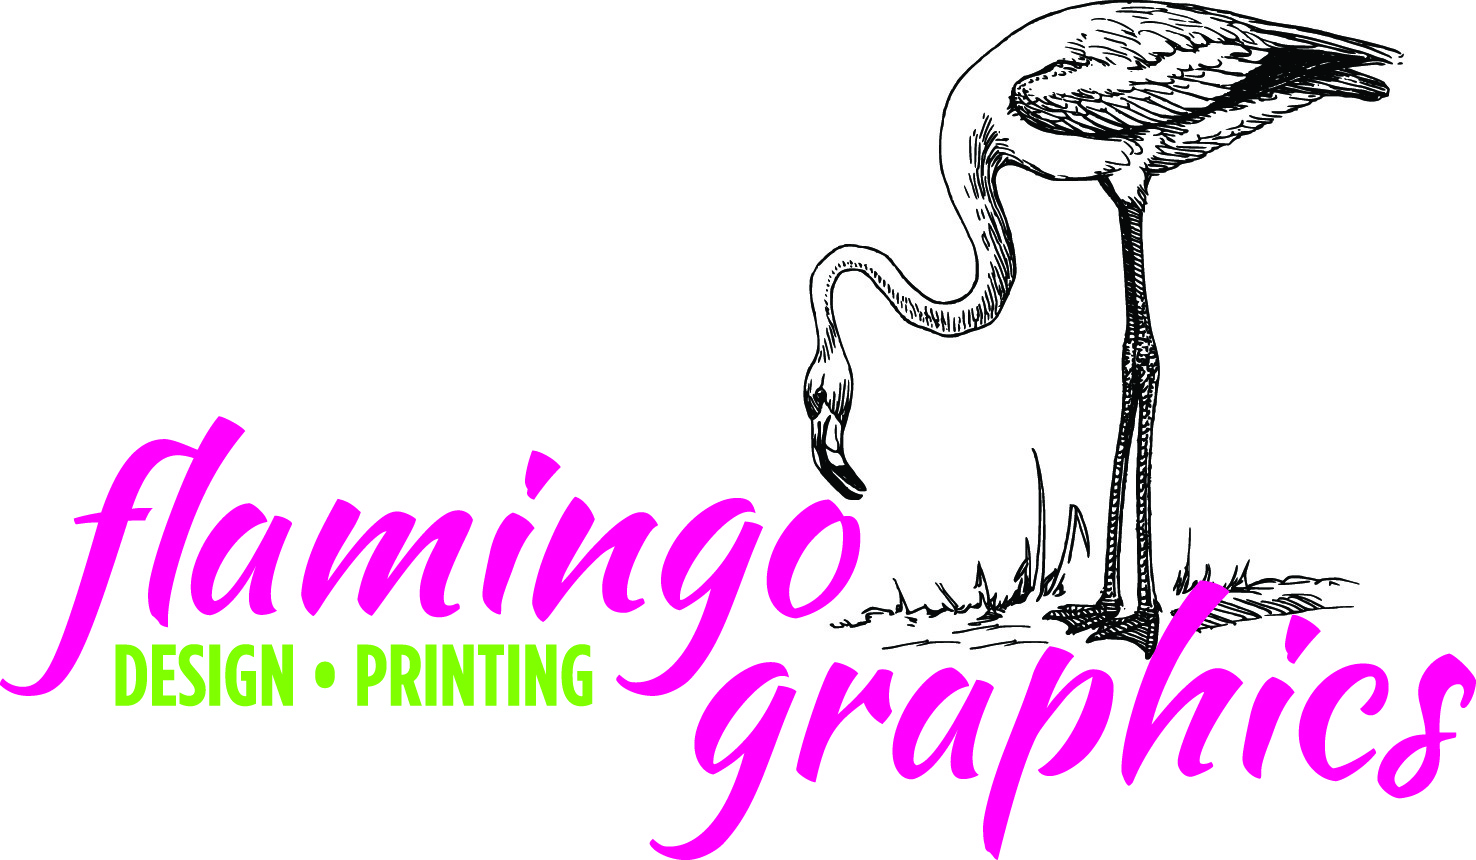 Flamingo Graphics logo.